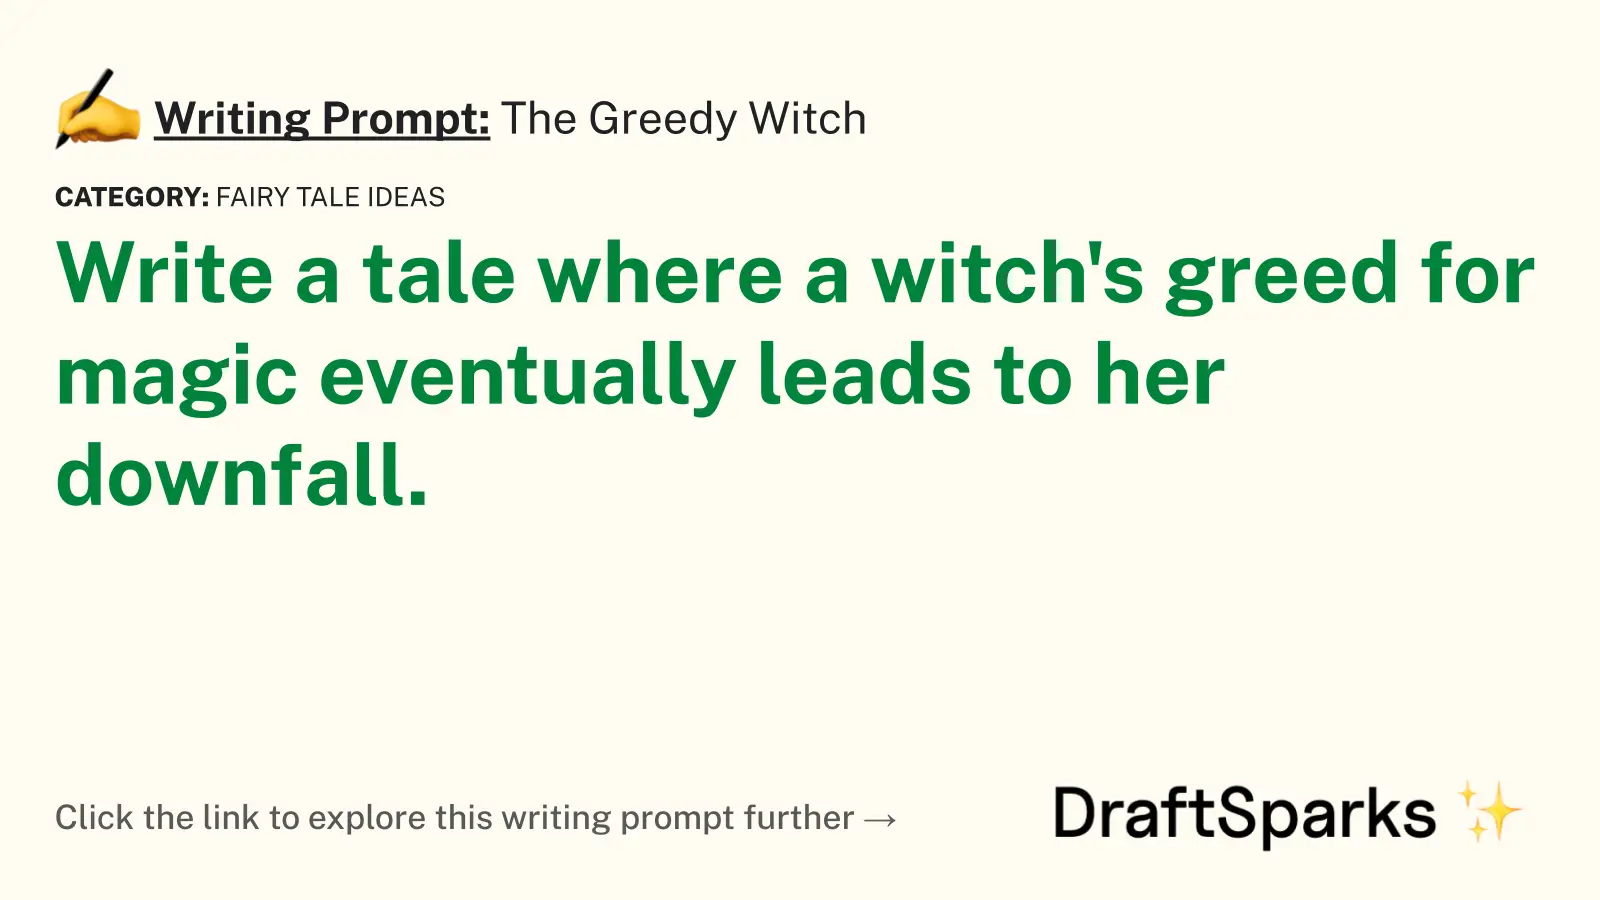 The Greedy Witch